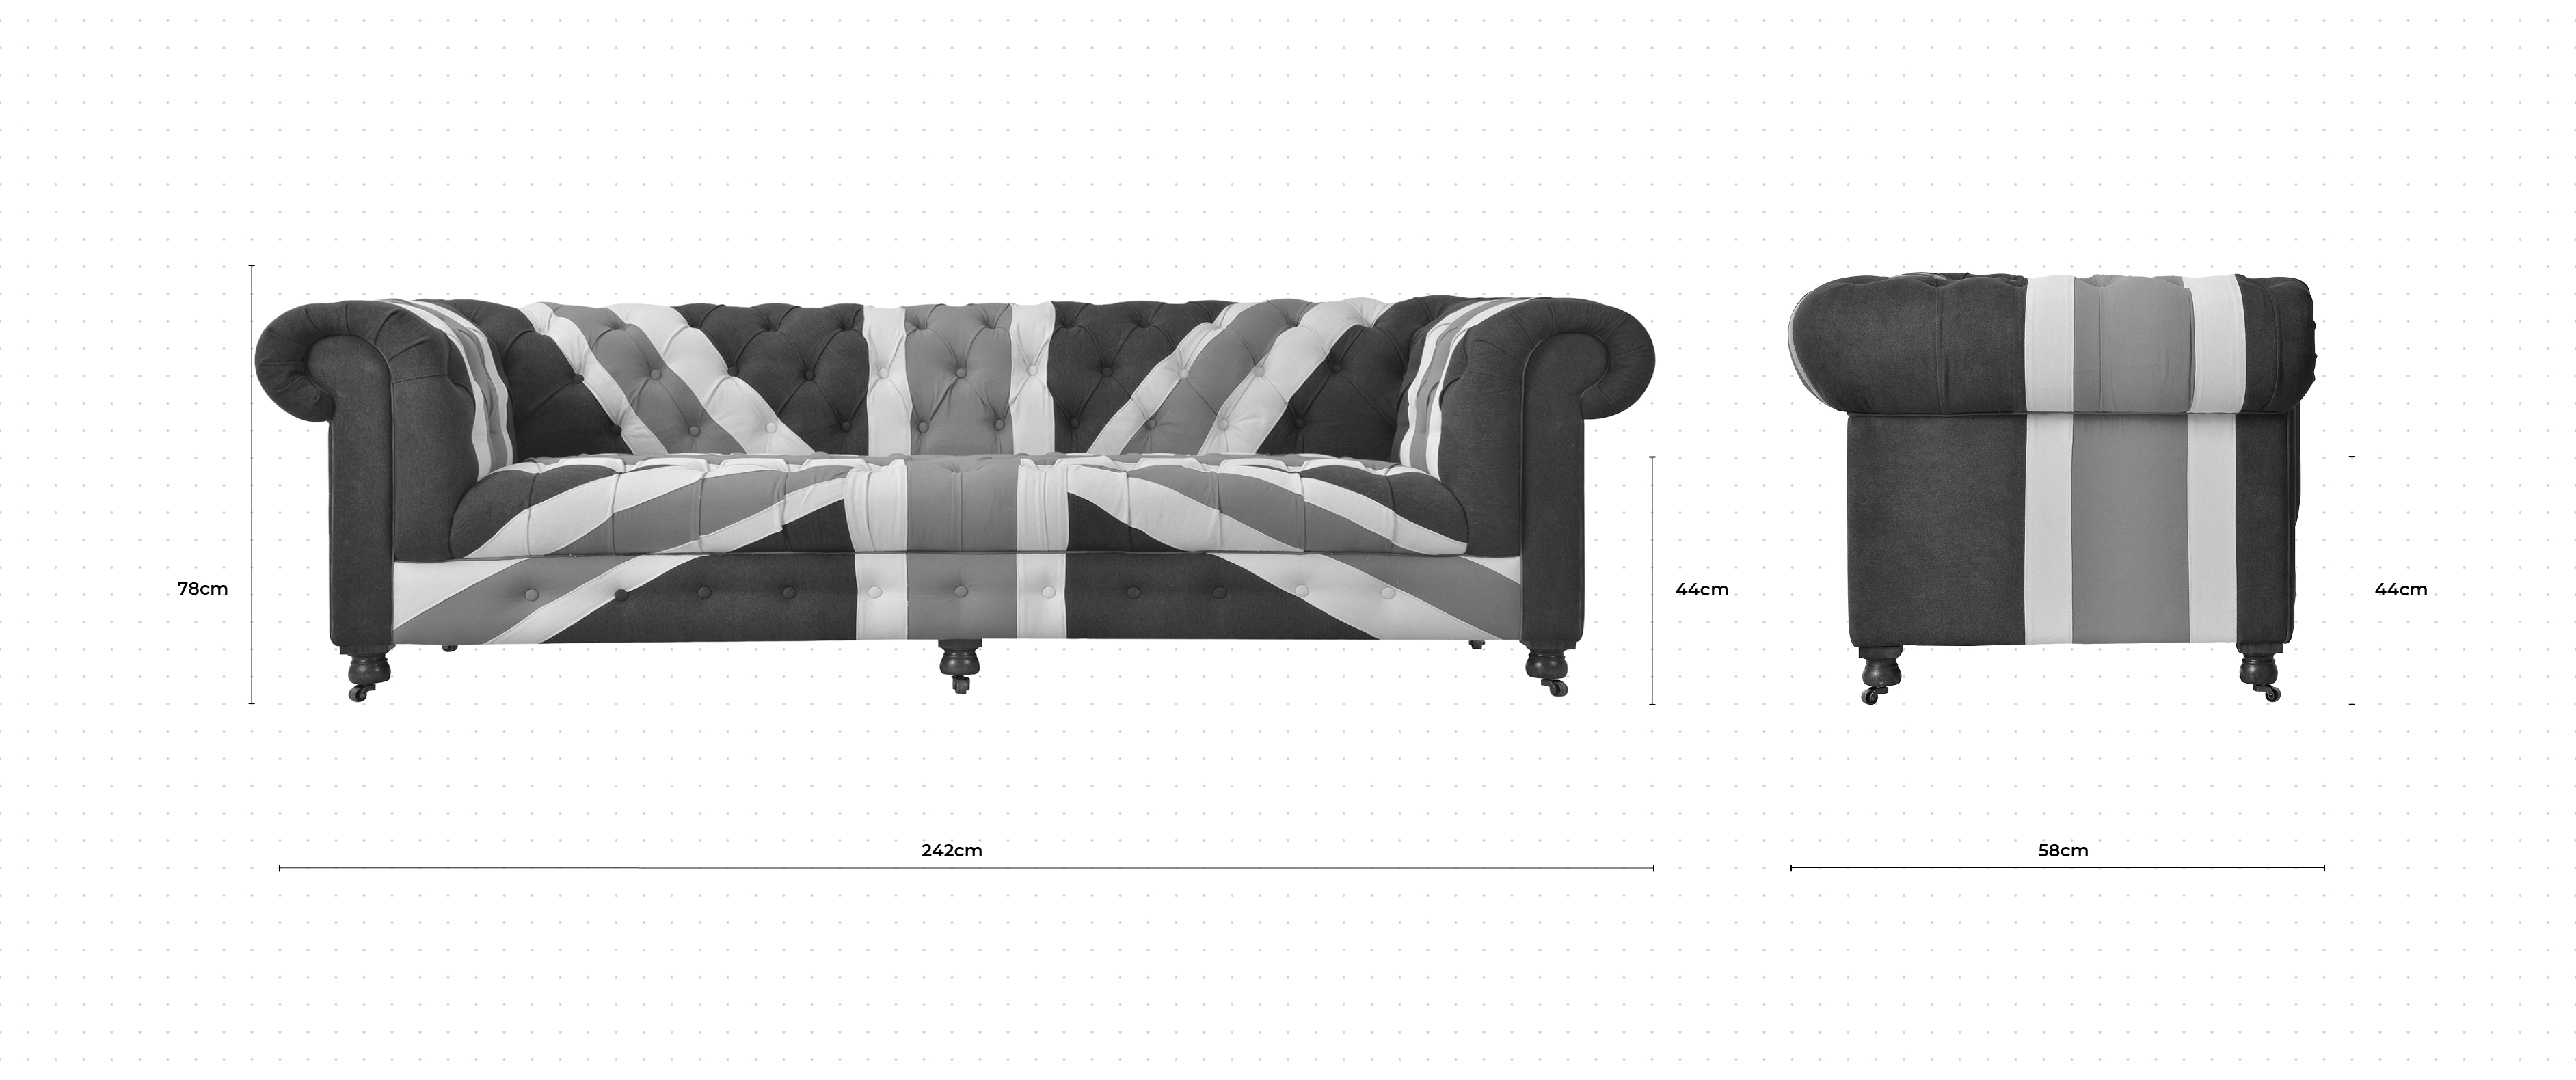 Bensington 3 Seater Sofa dimensions